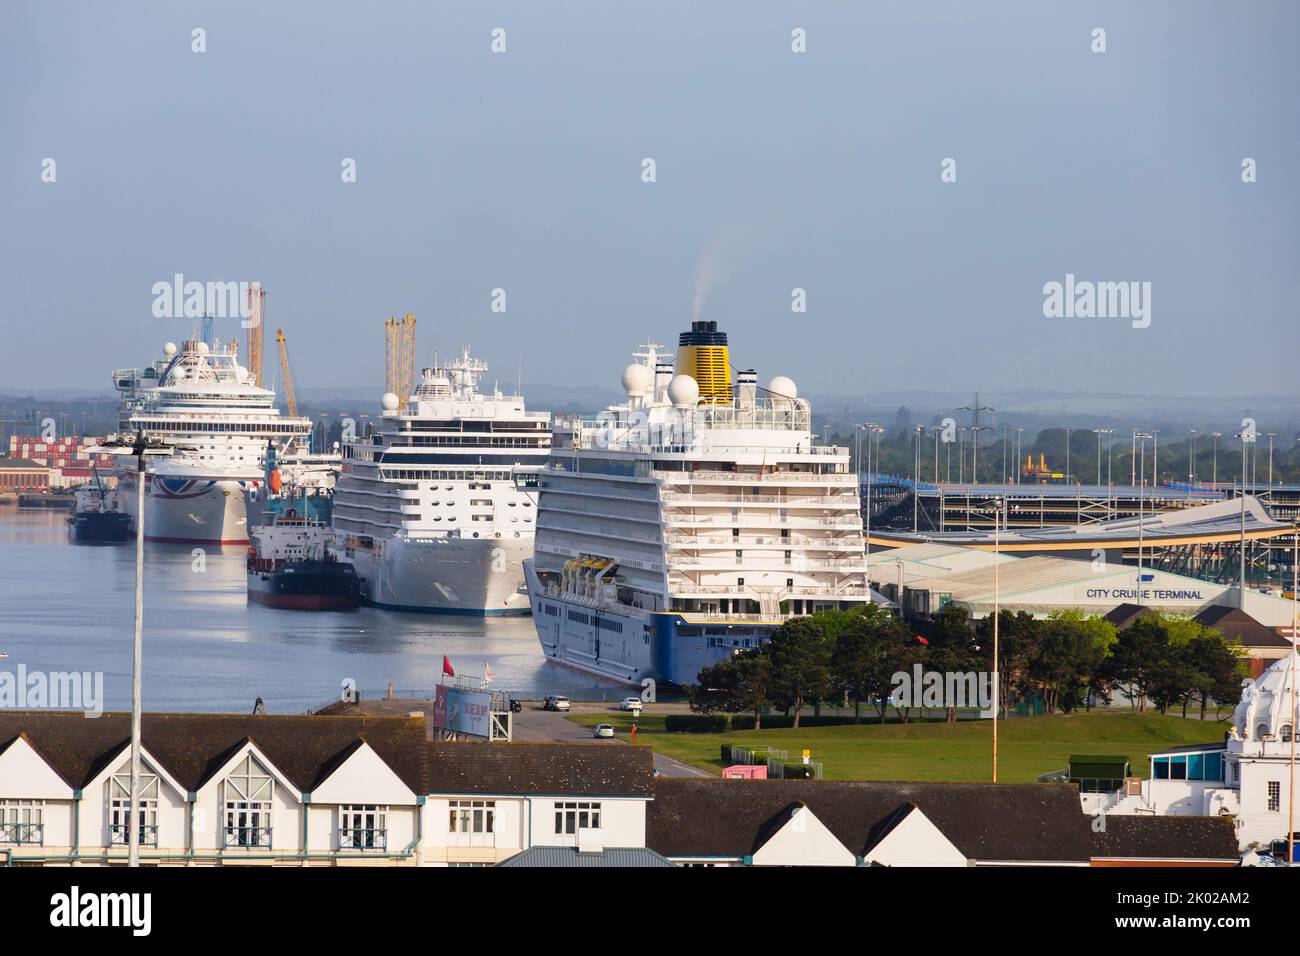 Cruise ships line up at the City Cruise Terminal, Southampton, Hampshire. P&O MS Ventura, Saga Spirit of Adventure, and Seven Seas Splendor. Stock Photo